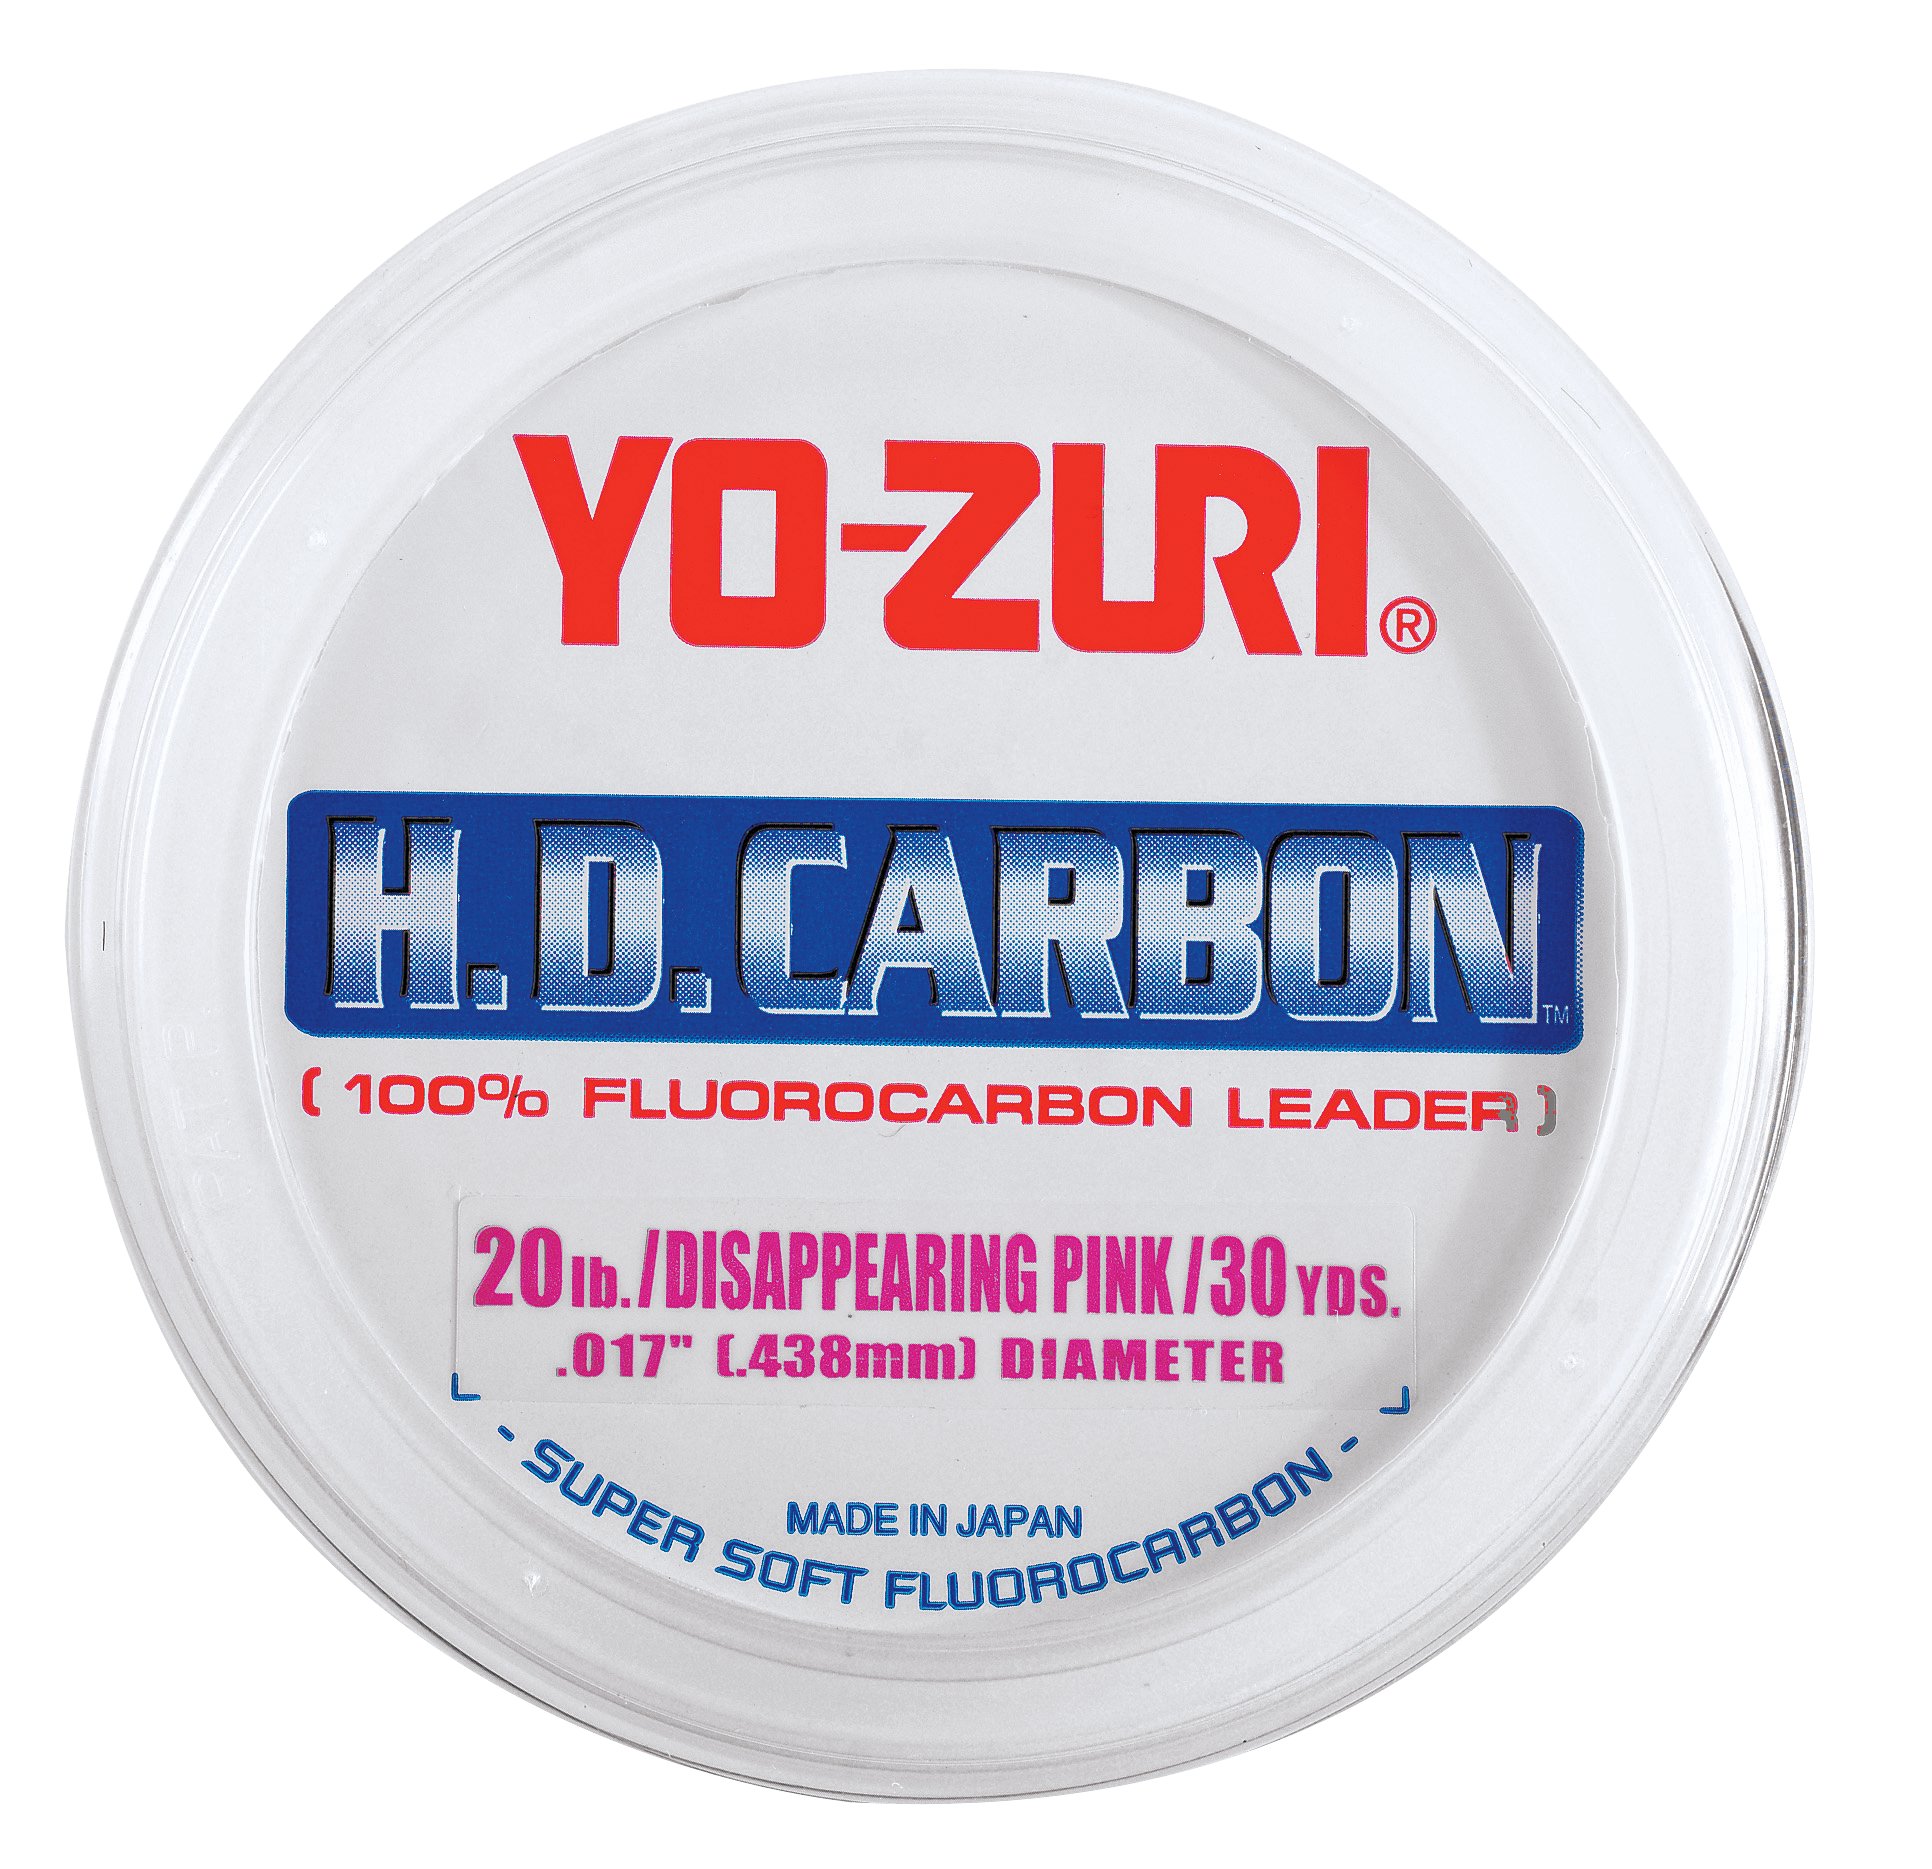 Yo-Zuri SuperFluoro 100% Fluorocarbon Leader Review - Wired2Fish